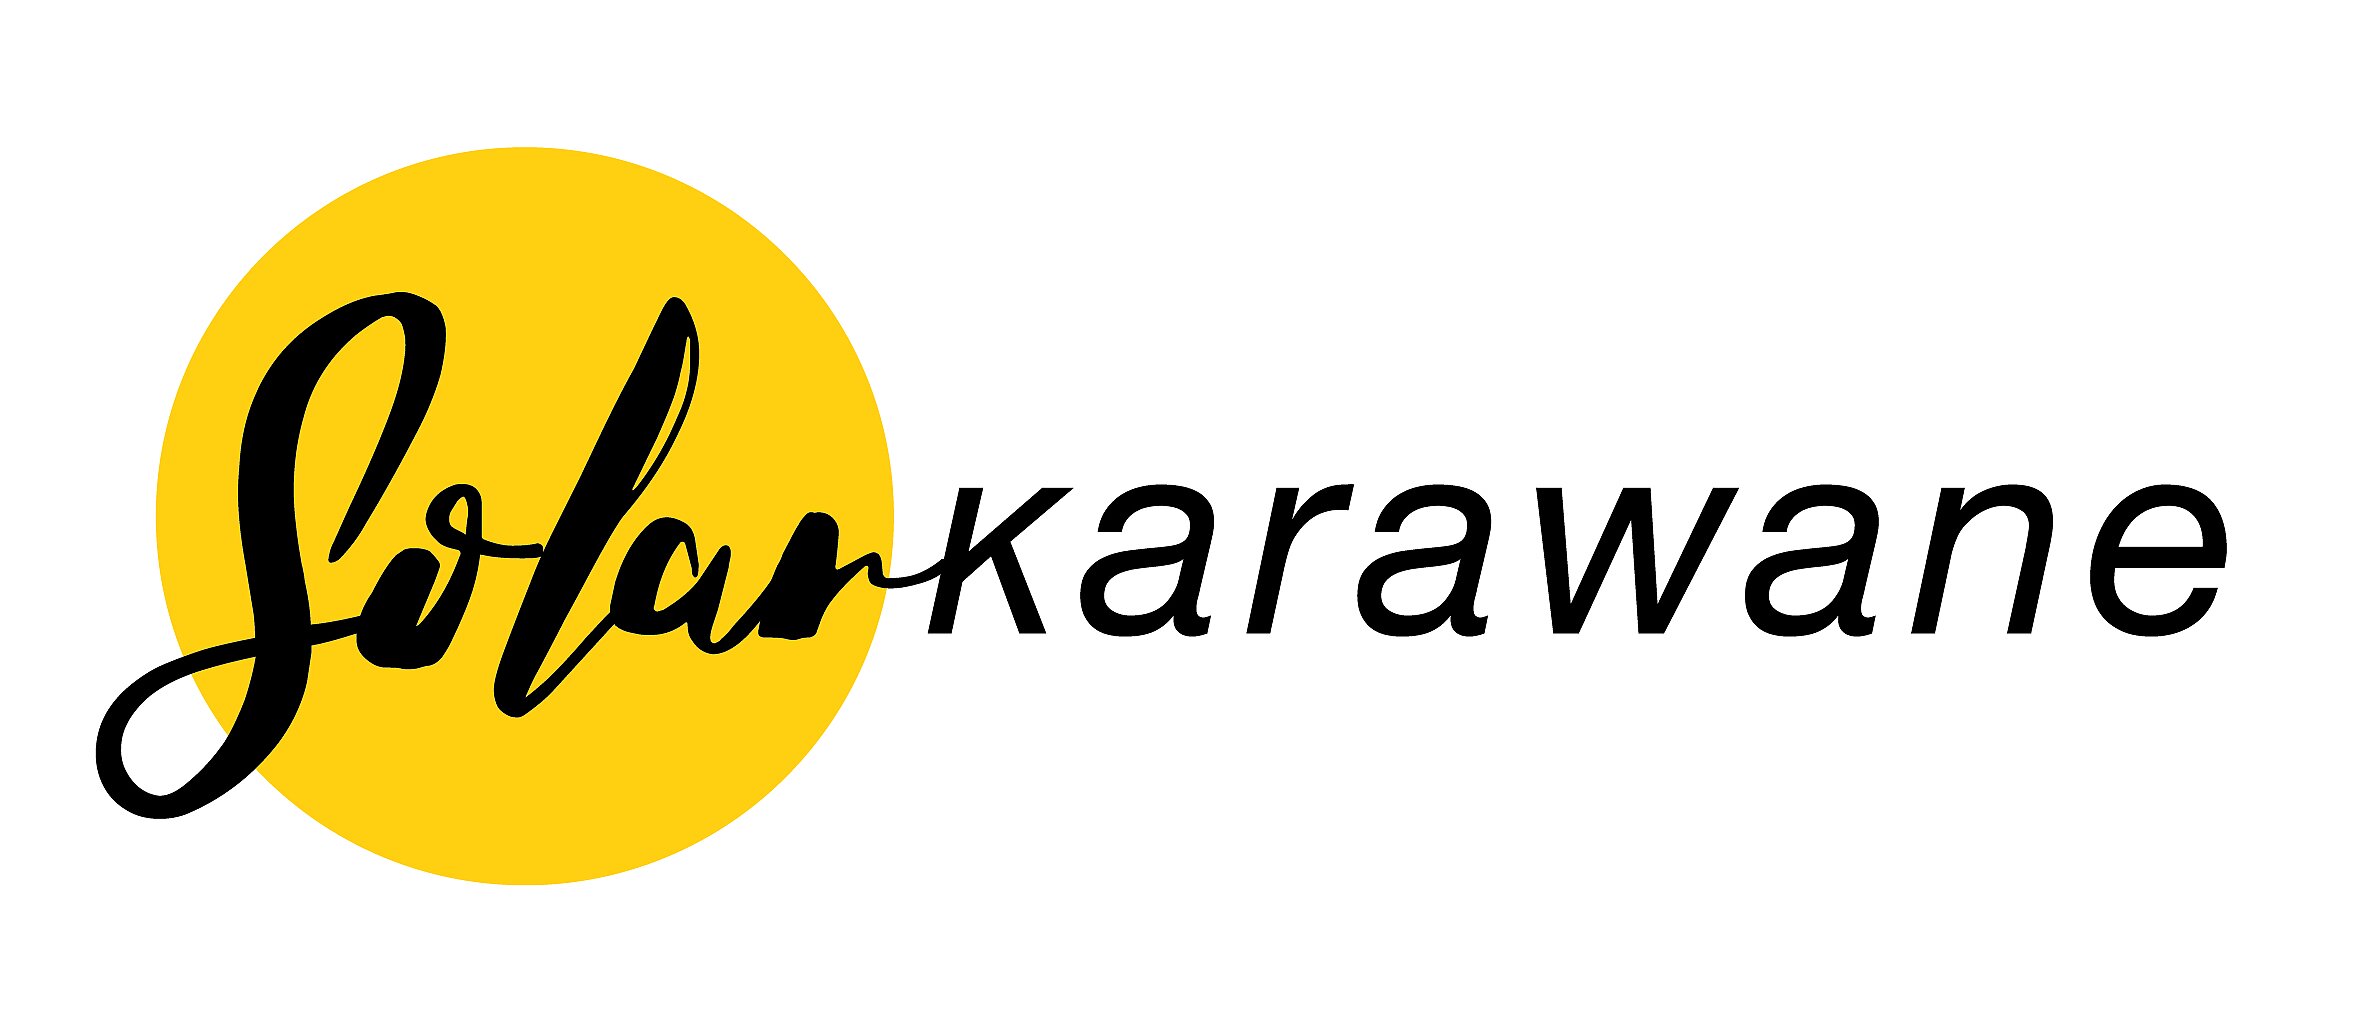 Logo der Solarkarawane